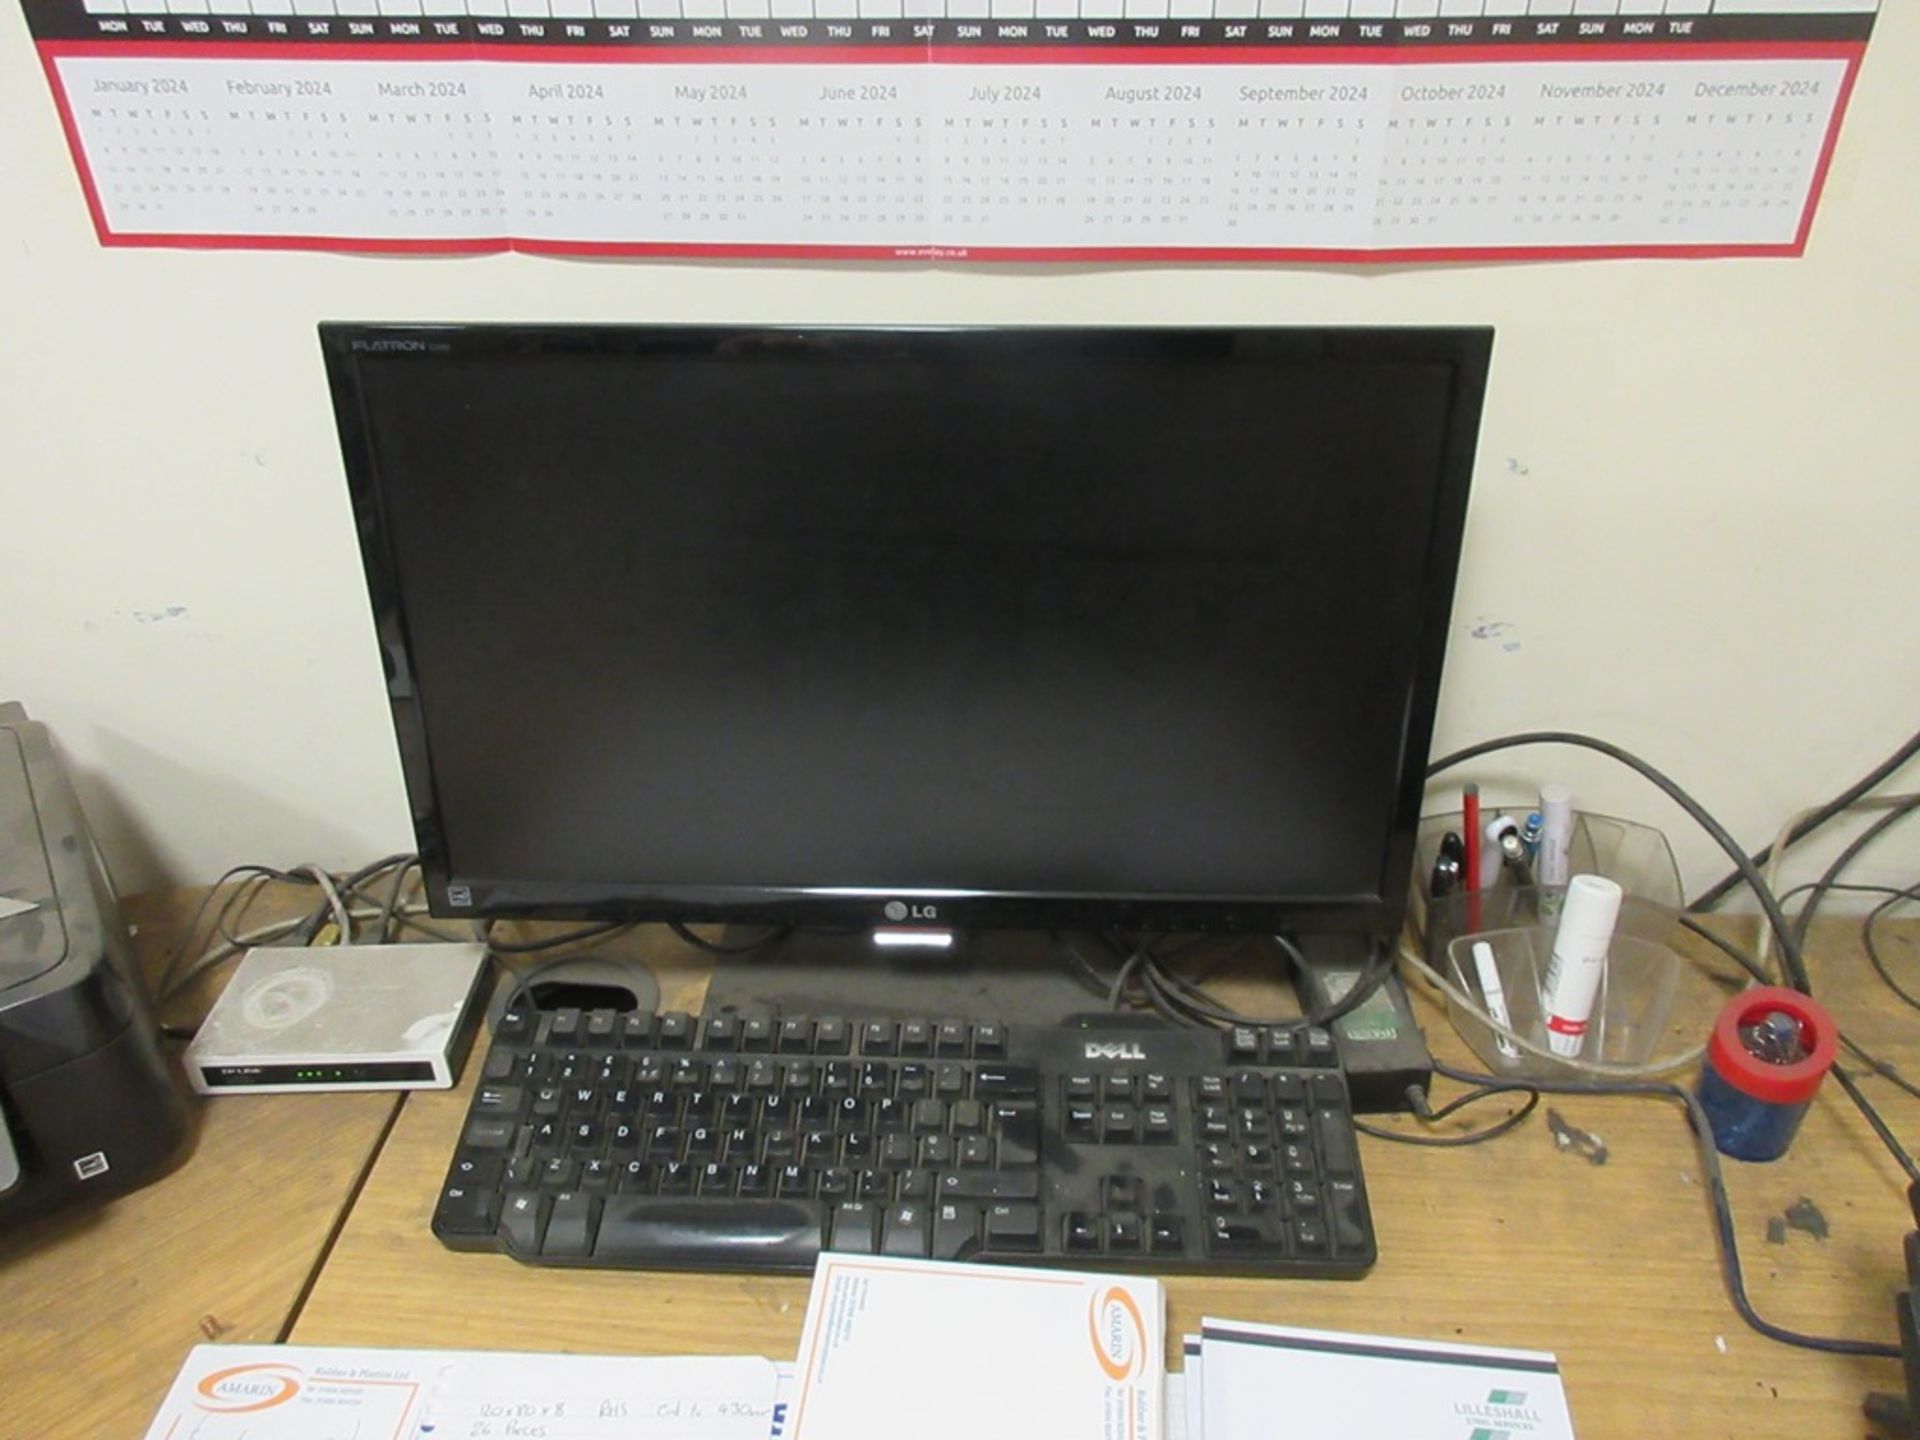 Dell Dimension E520 desktop PC, LG flat screen monitor, keyboard, mouse